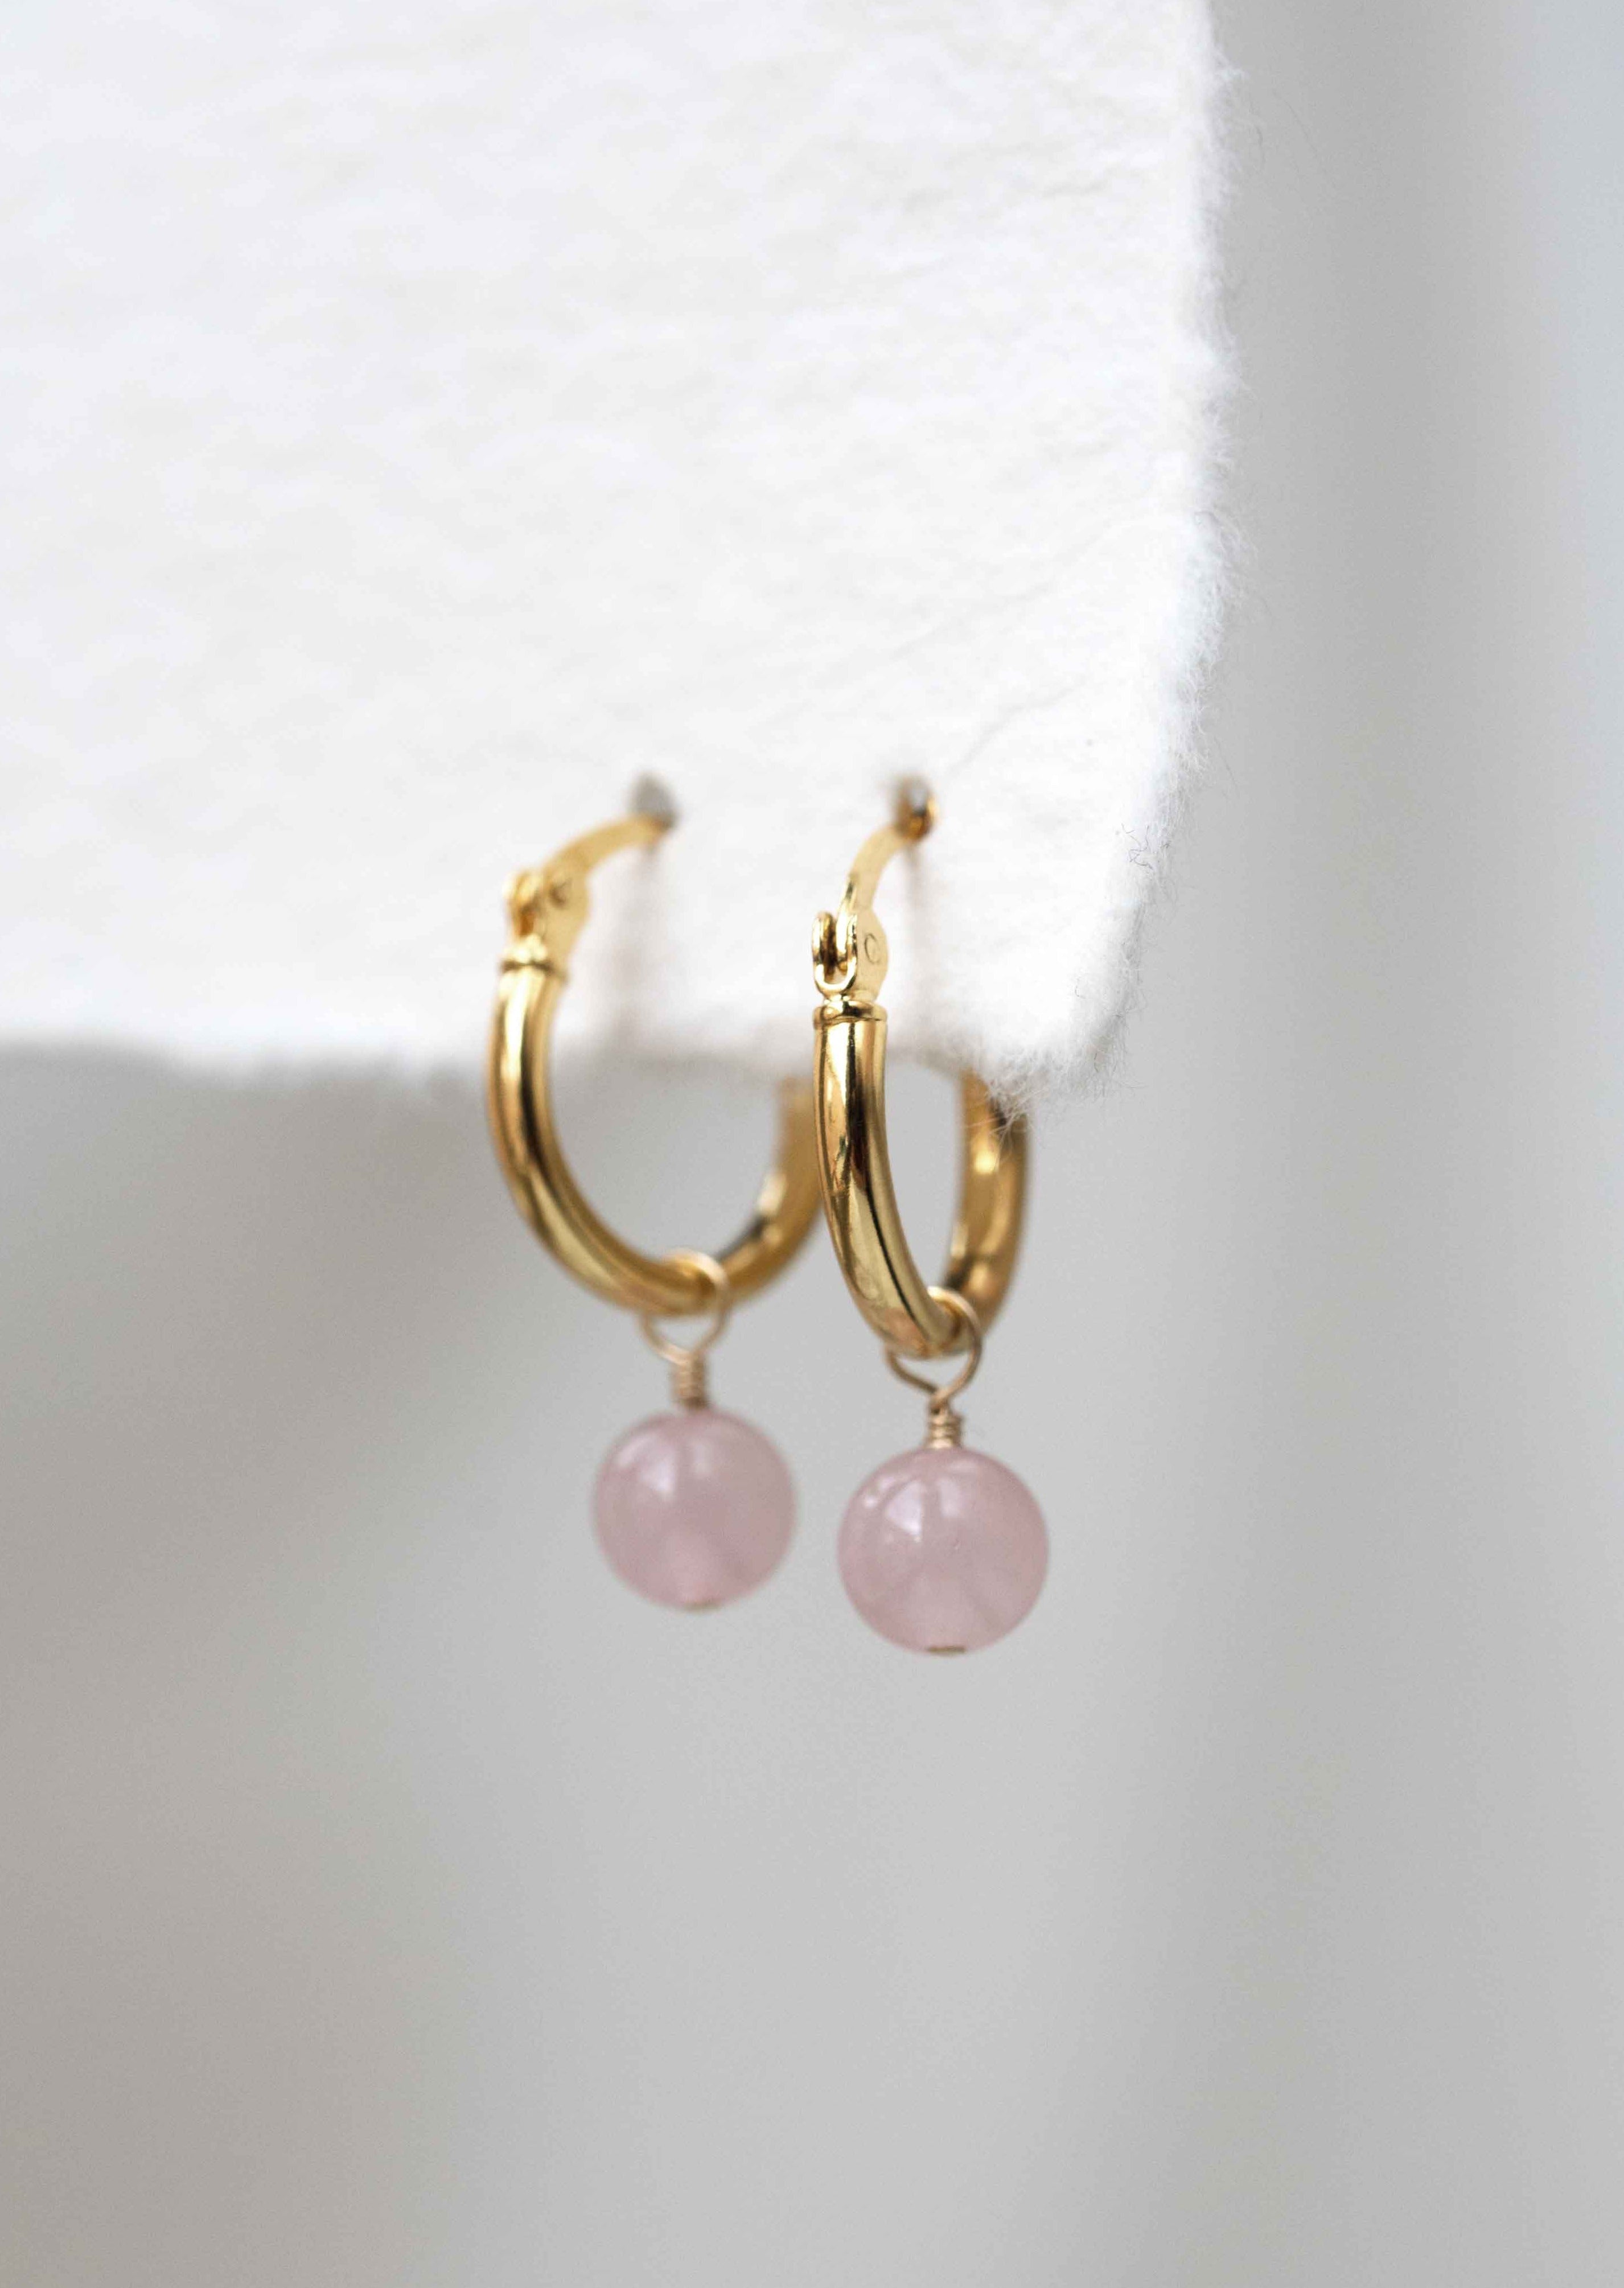 rose quartz earrings in gold hoops